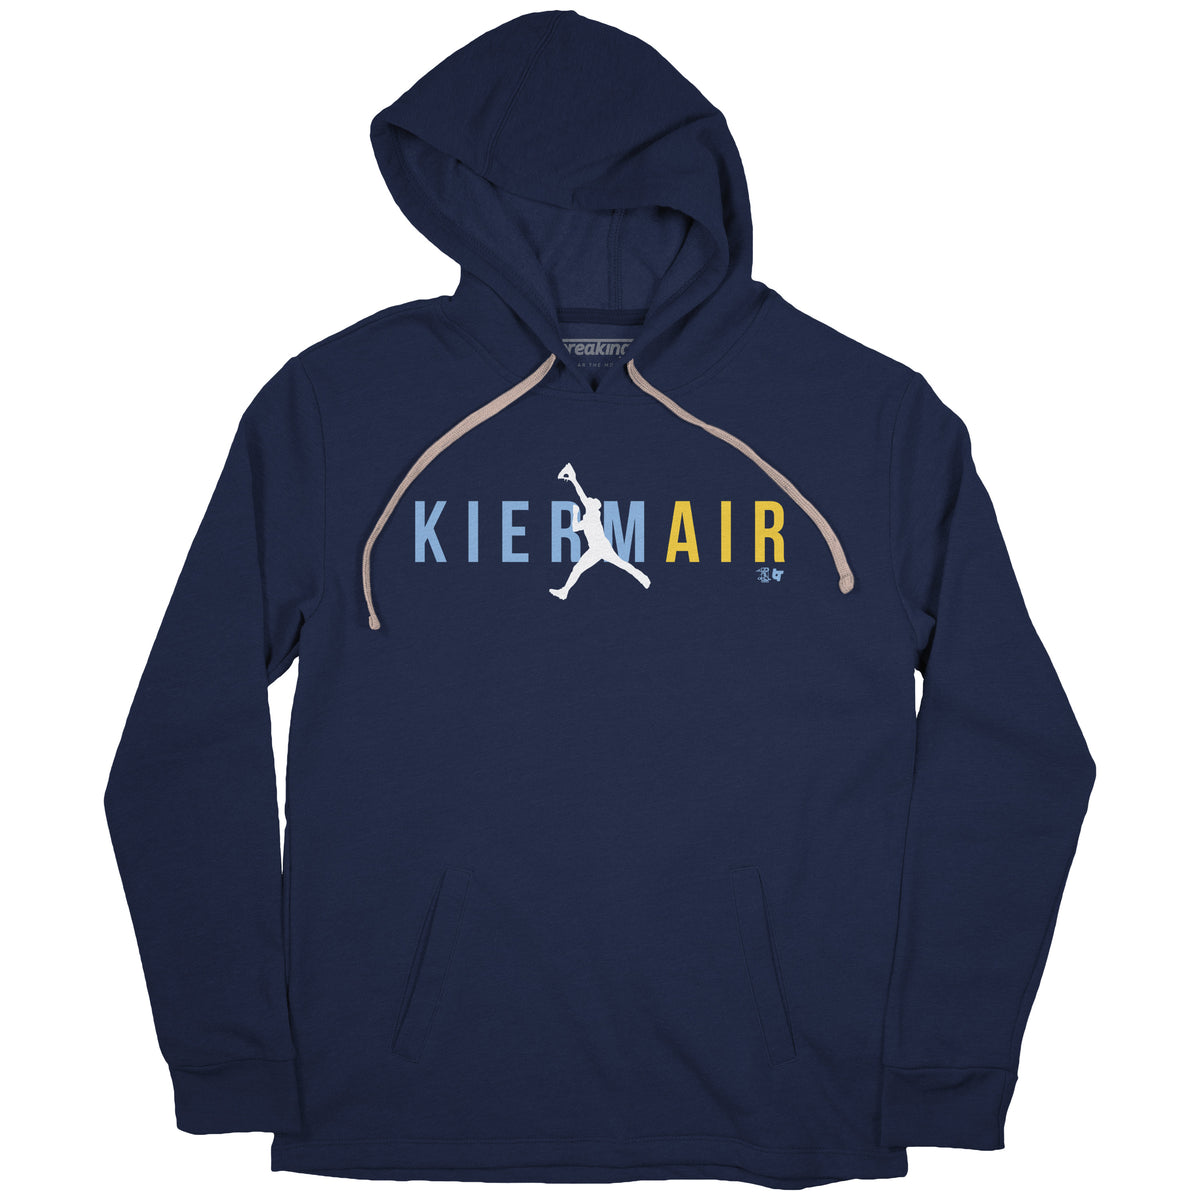 Kevin Kiermaier Shirt - Kierm-Air, Tampa Bay - BreakingT